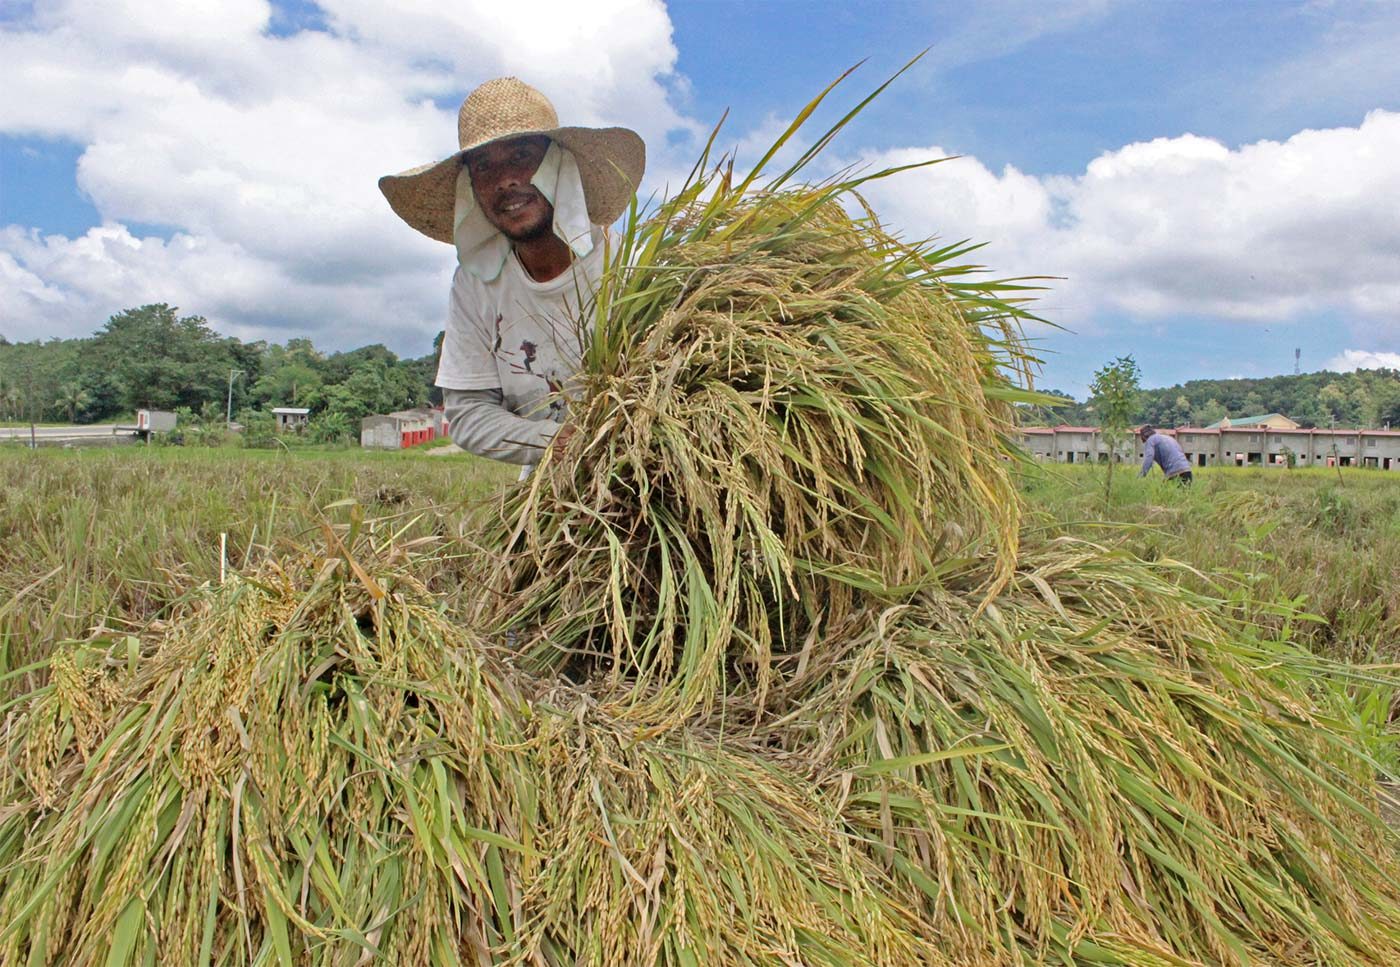 Rice stocks hit 2.63 million metric tons in April 2019